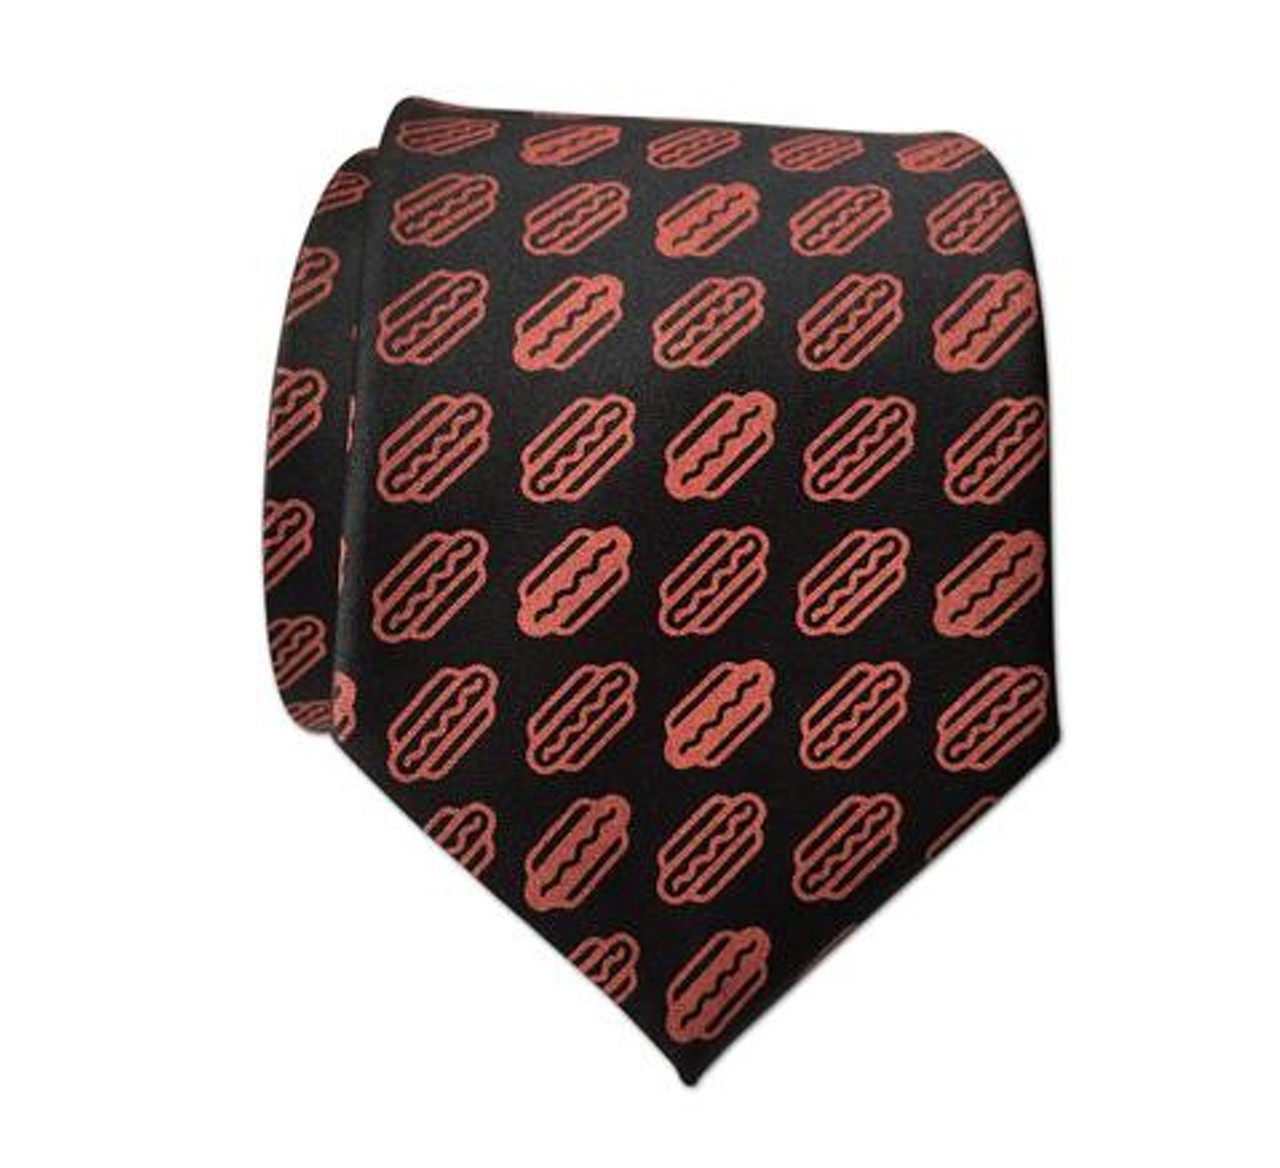 Hot Dog Party printed necktie, $36.